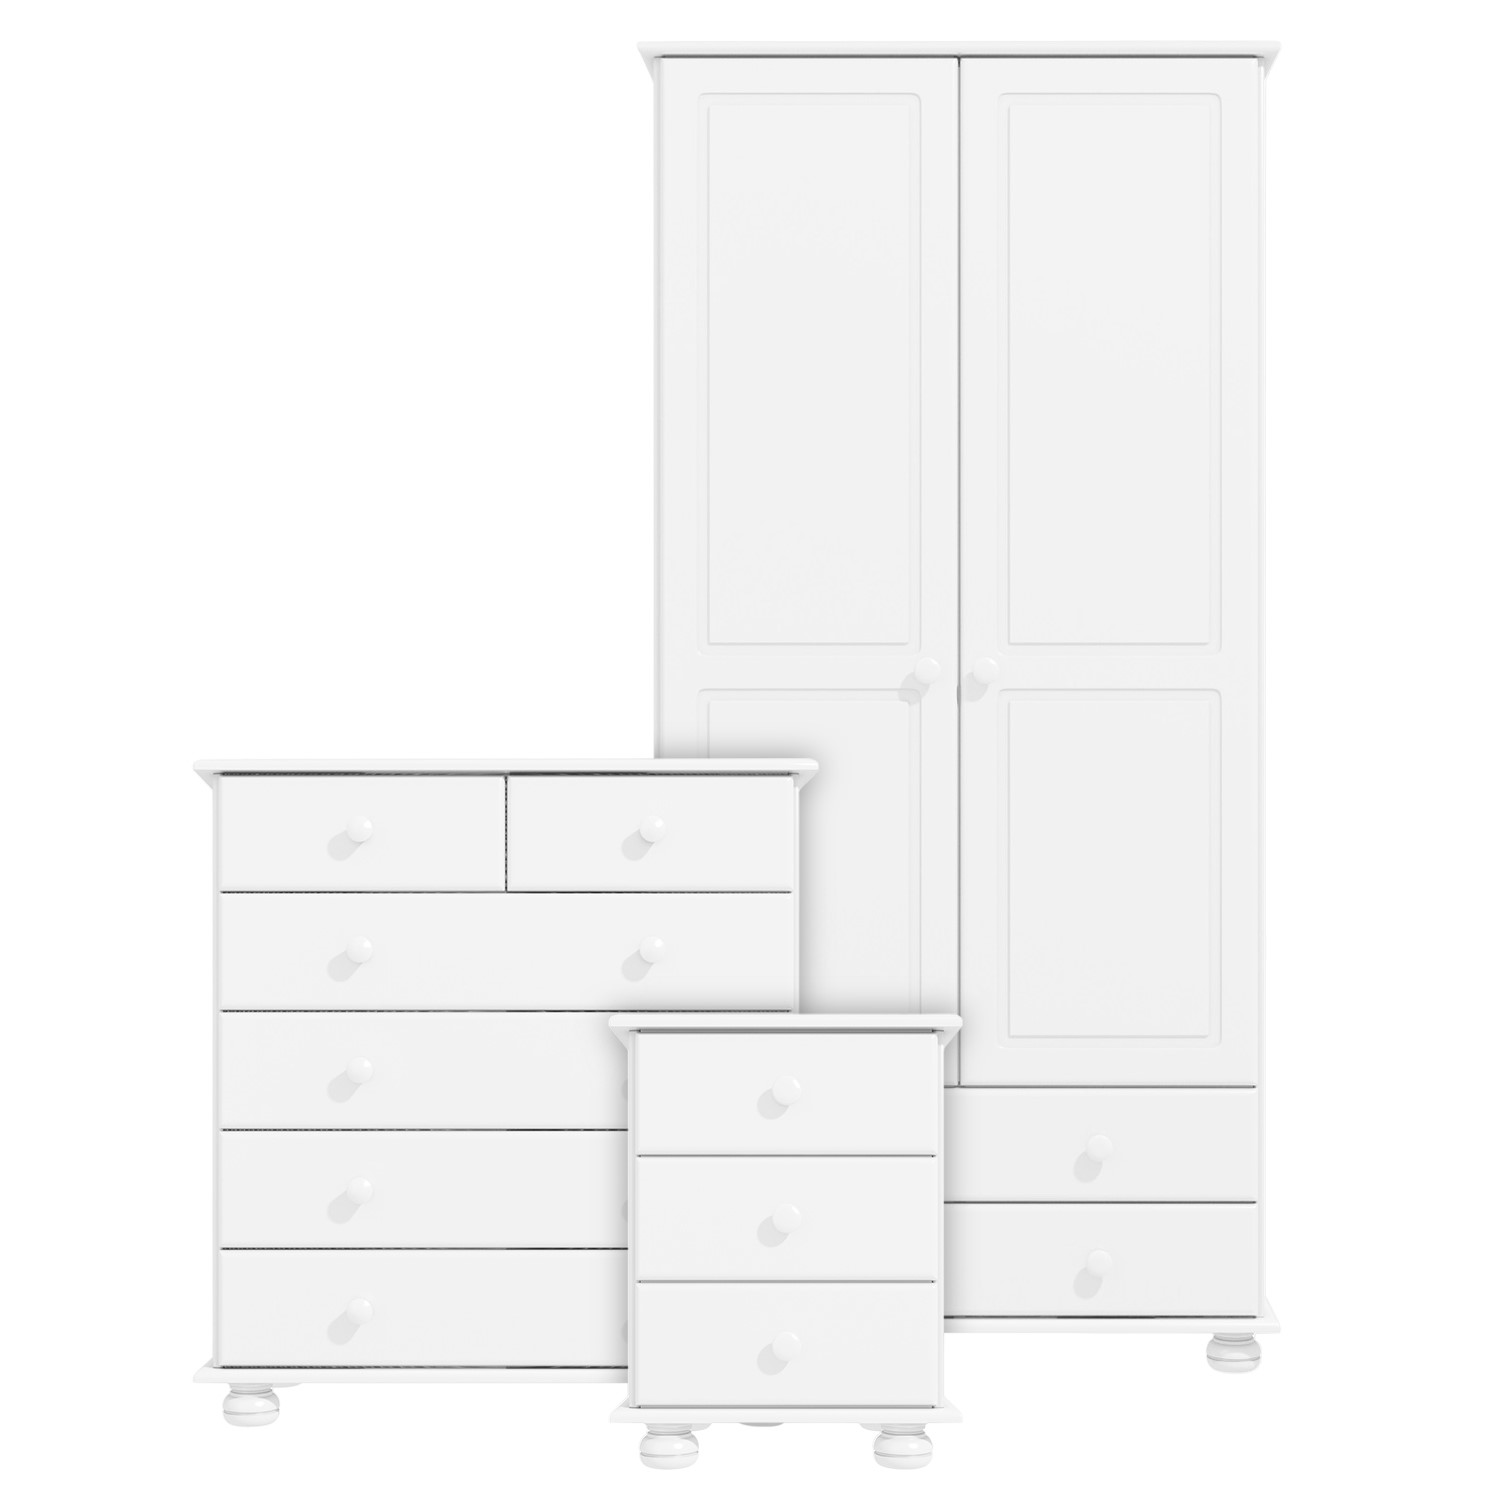 Photo of White 3 piece bedroom furniture set - hamilton